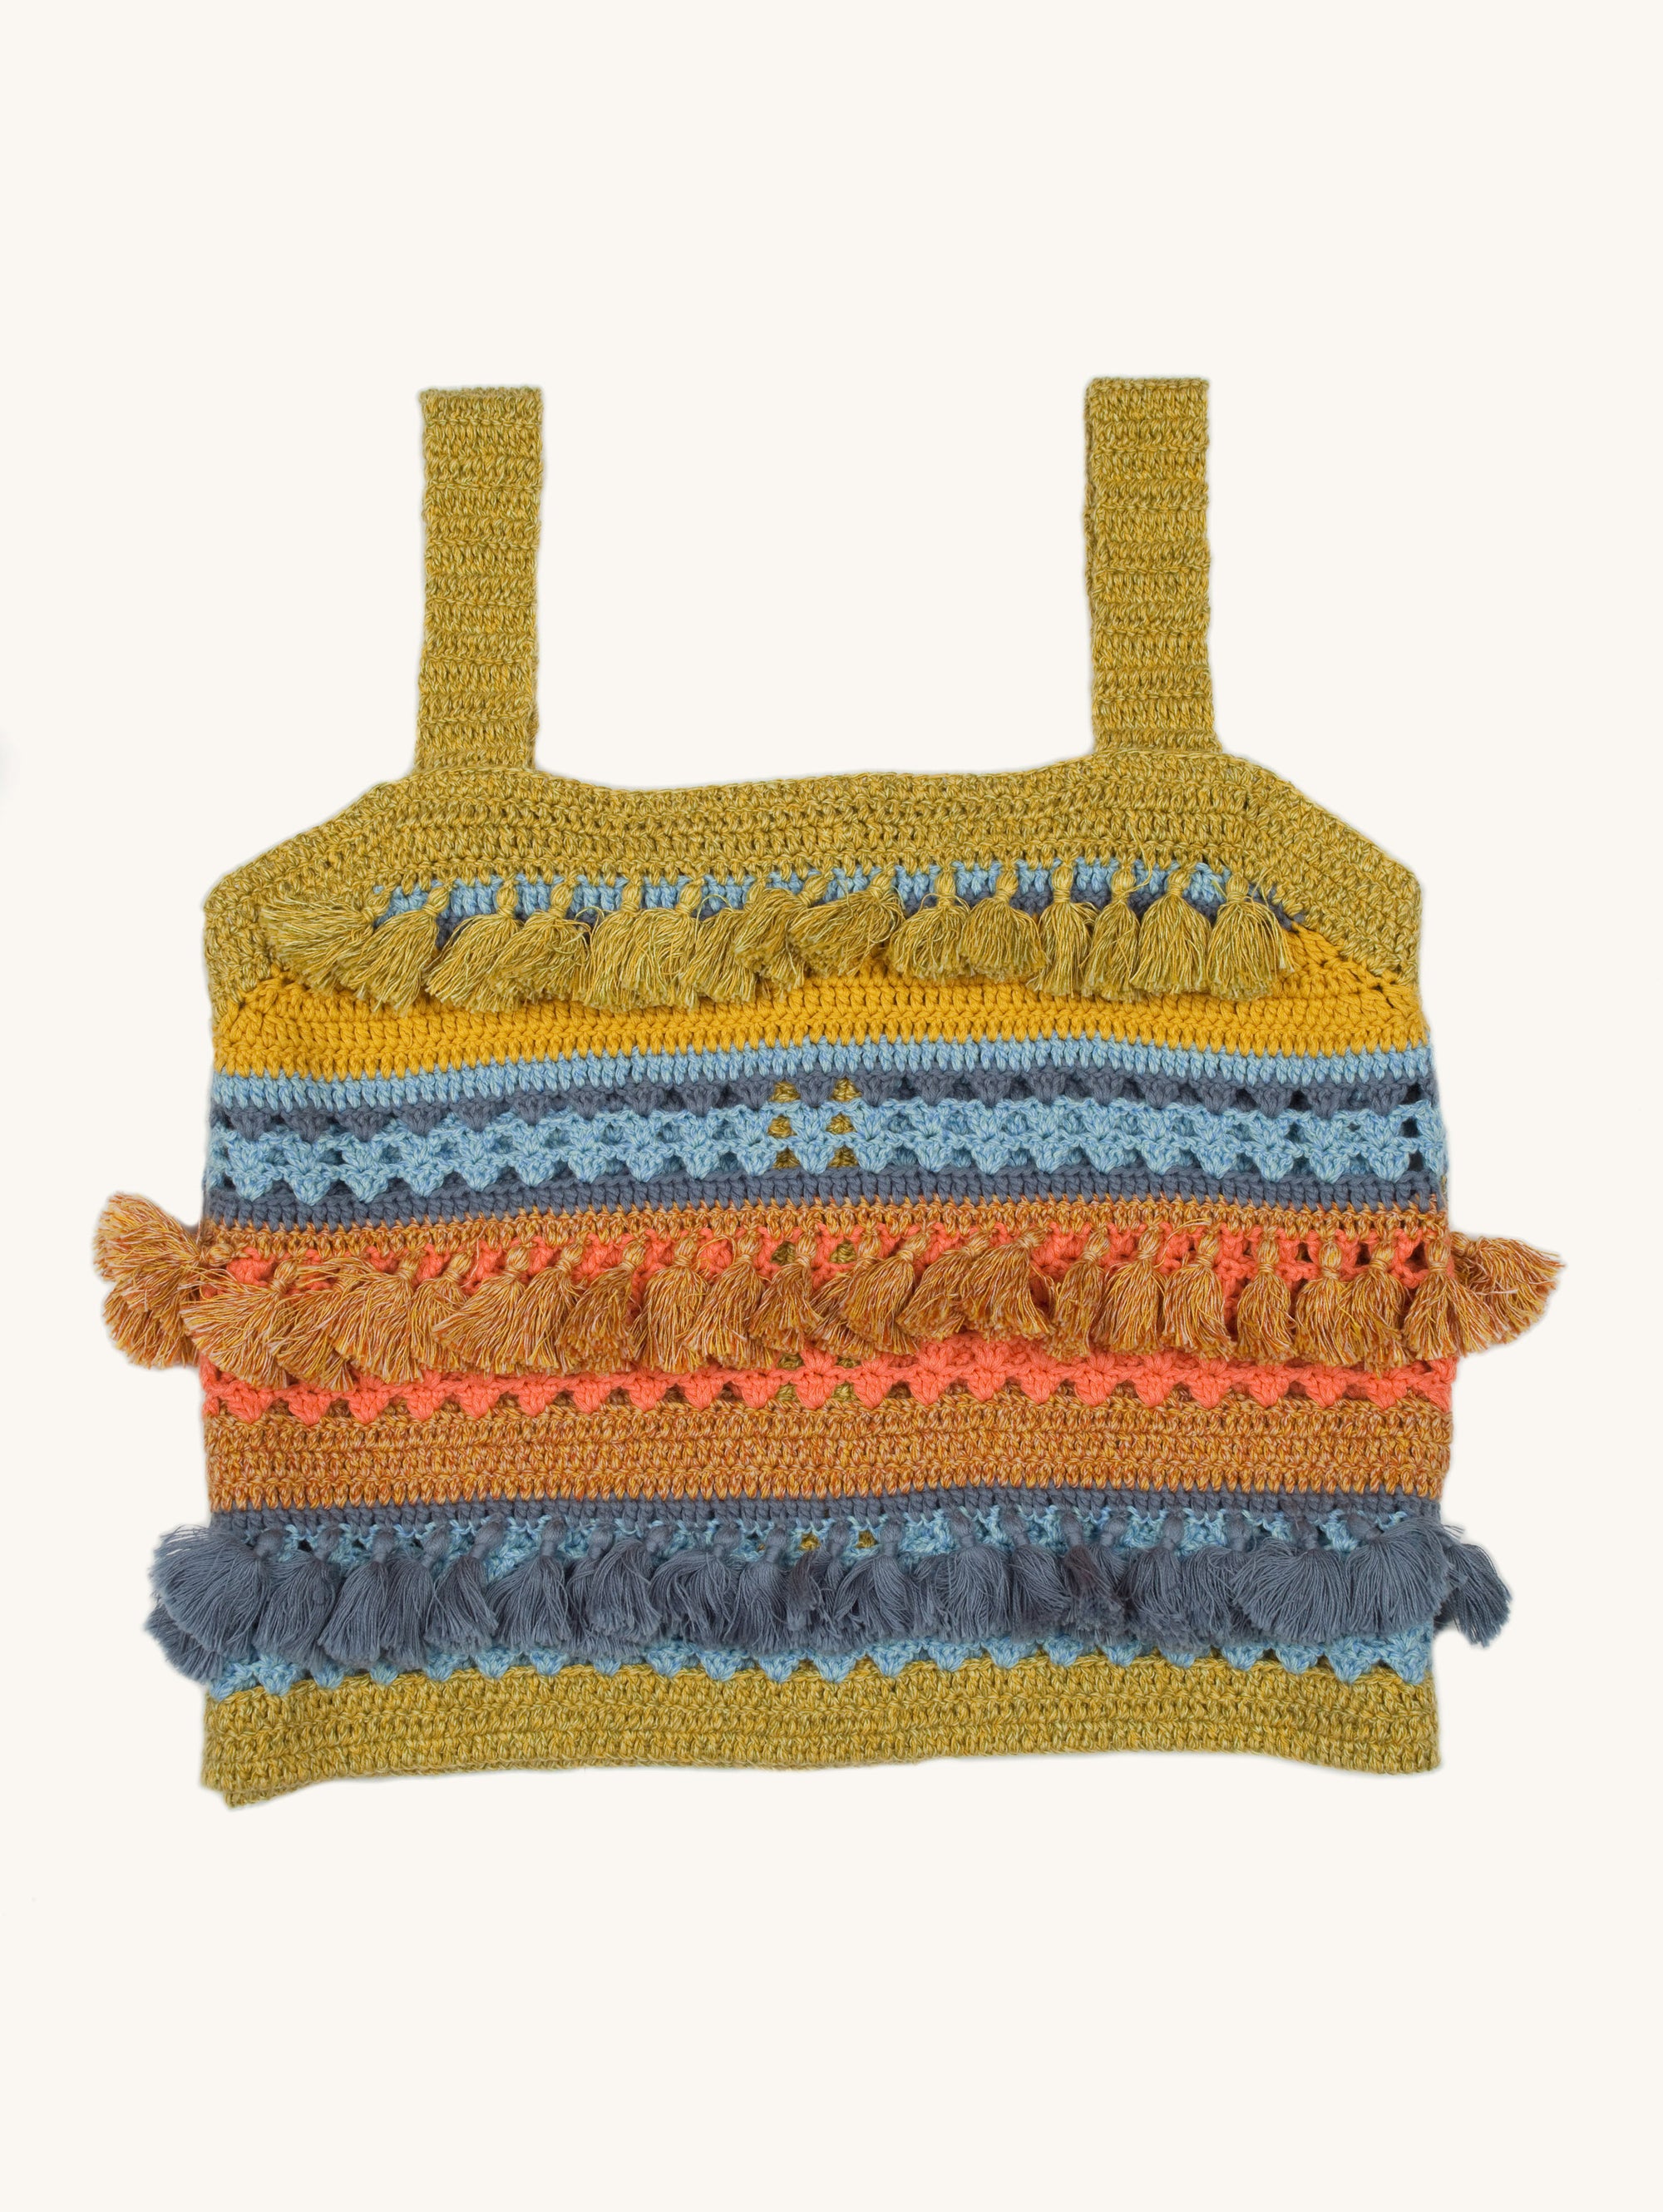 no 24 - hand crochet